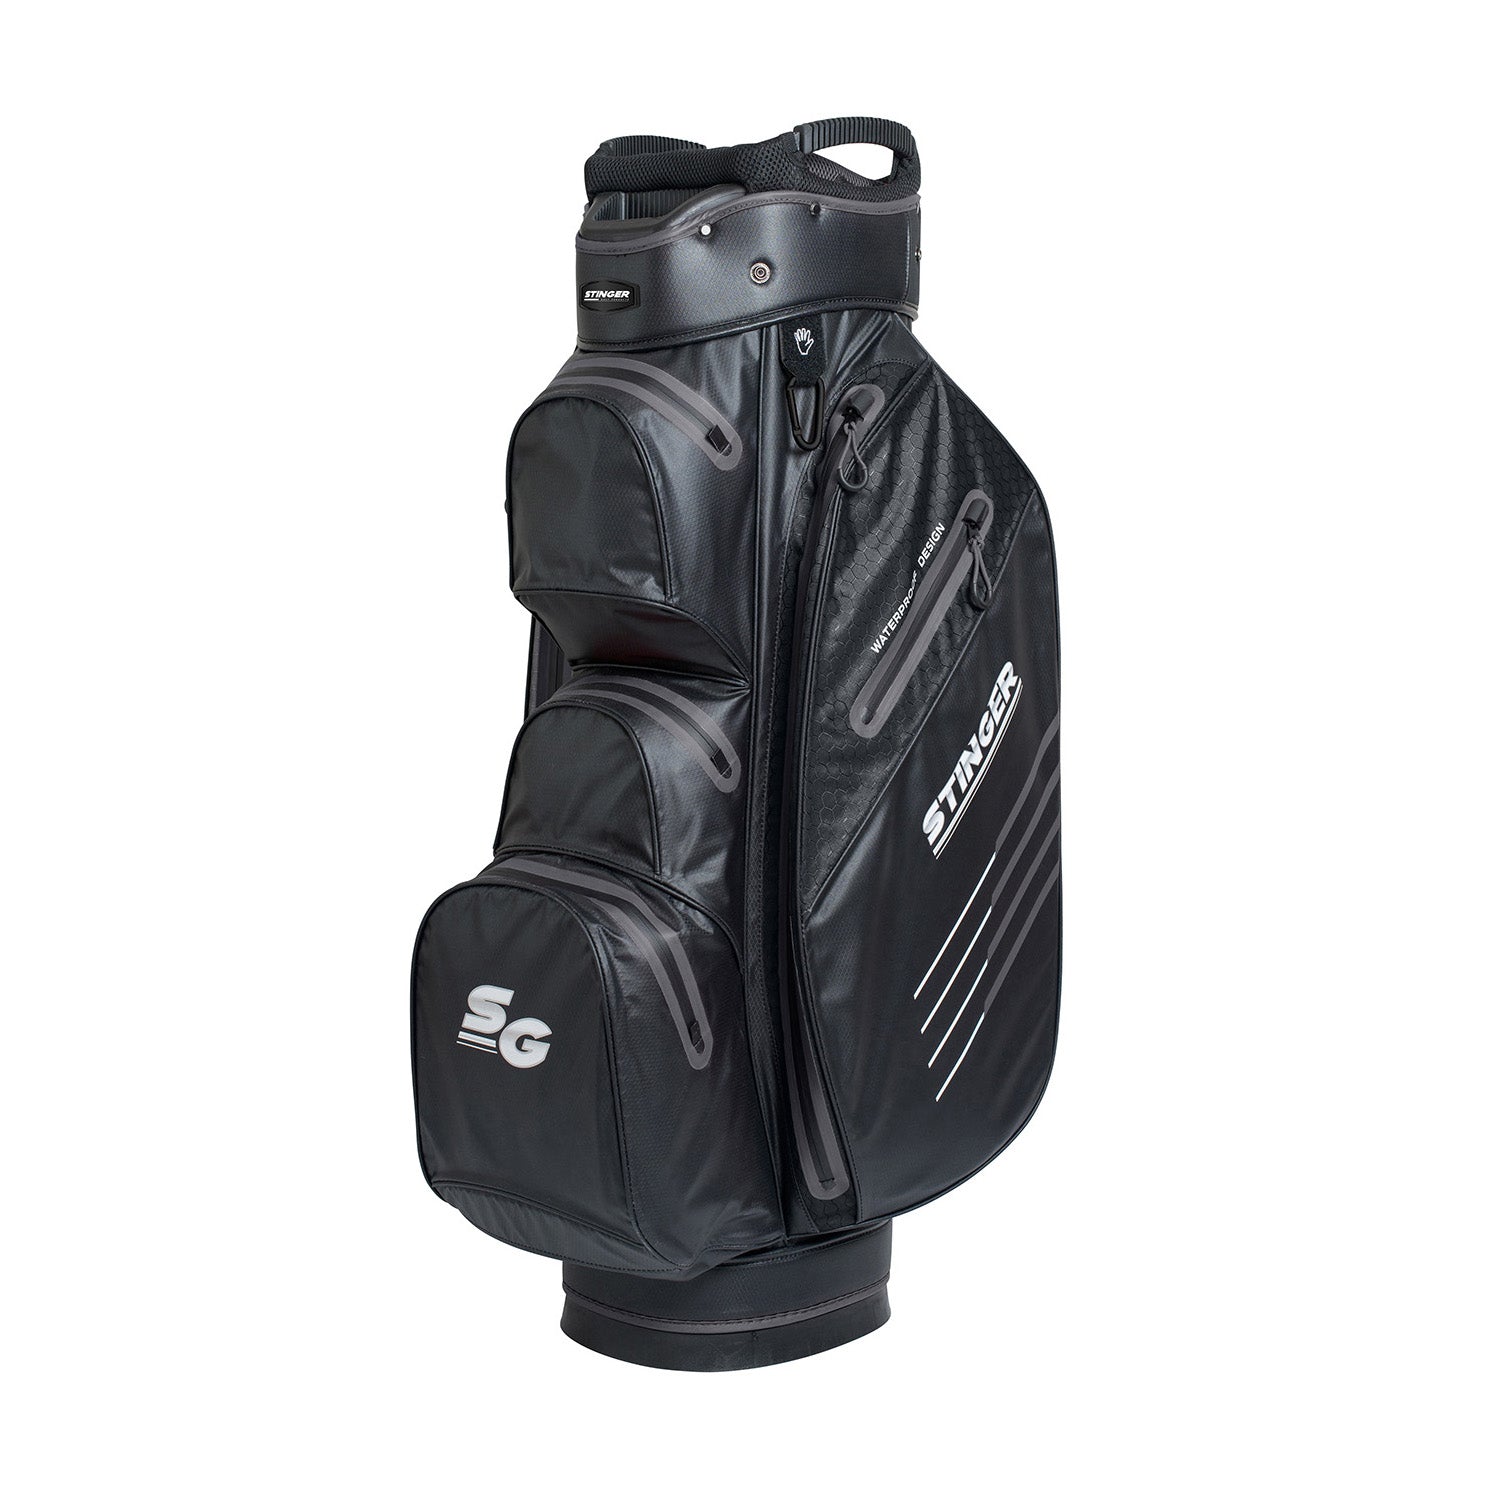 Stinger Waterproof Golf Bag - Black/Grey